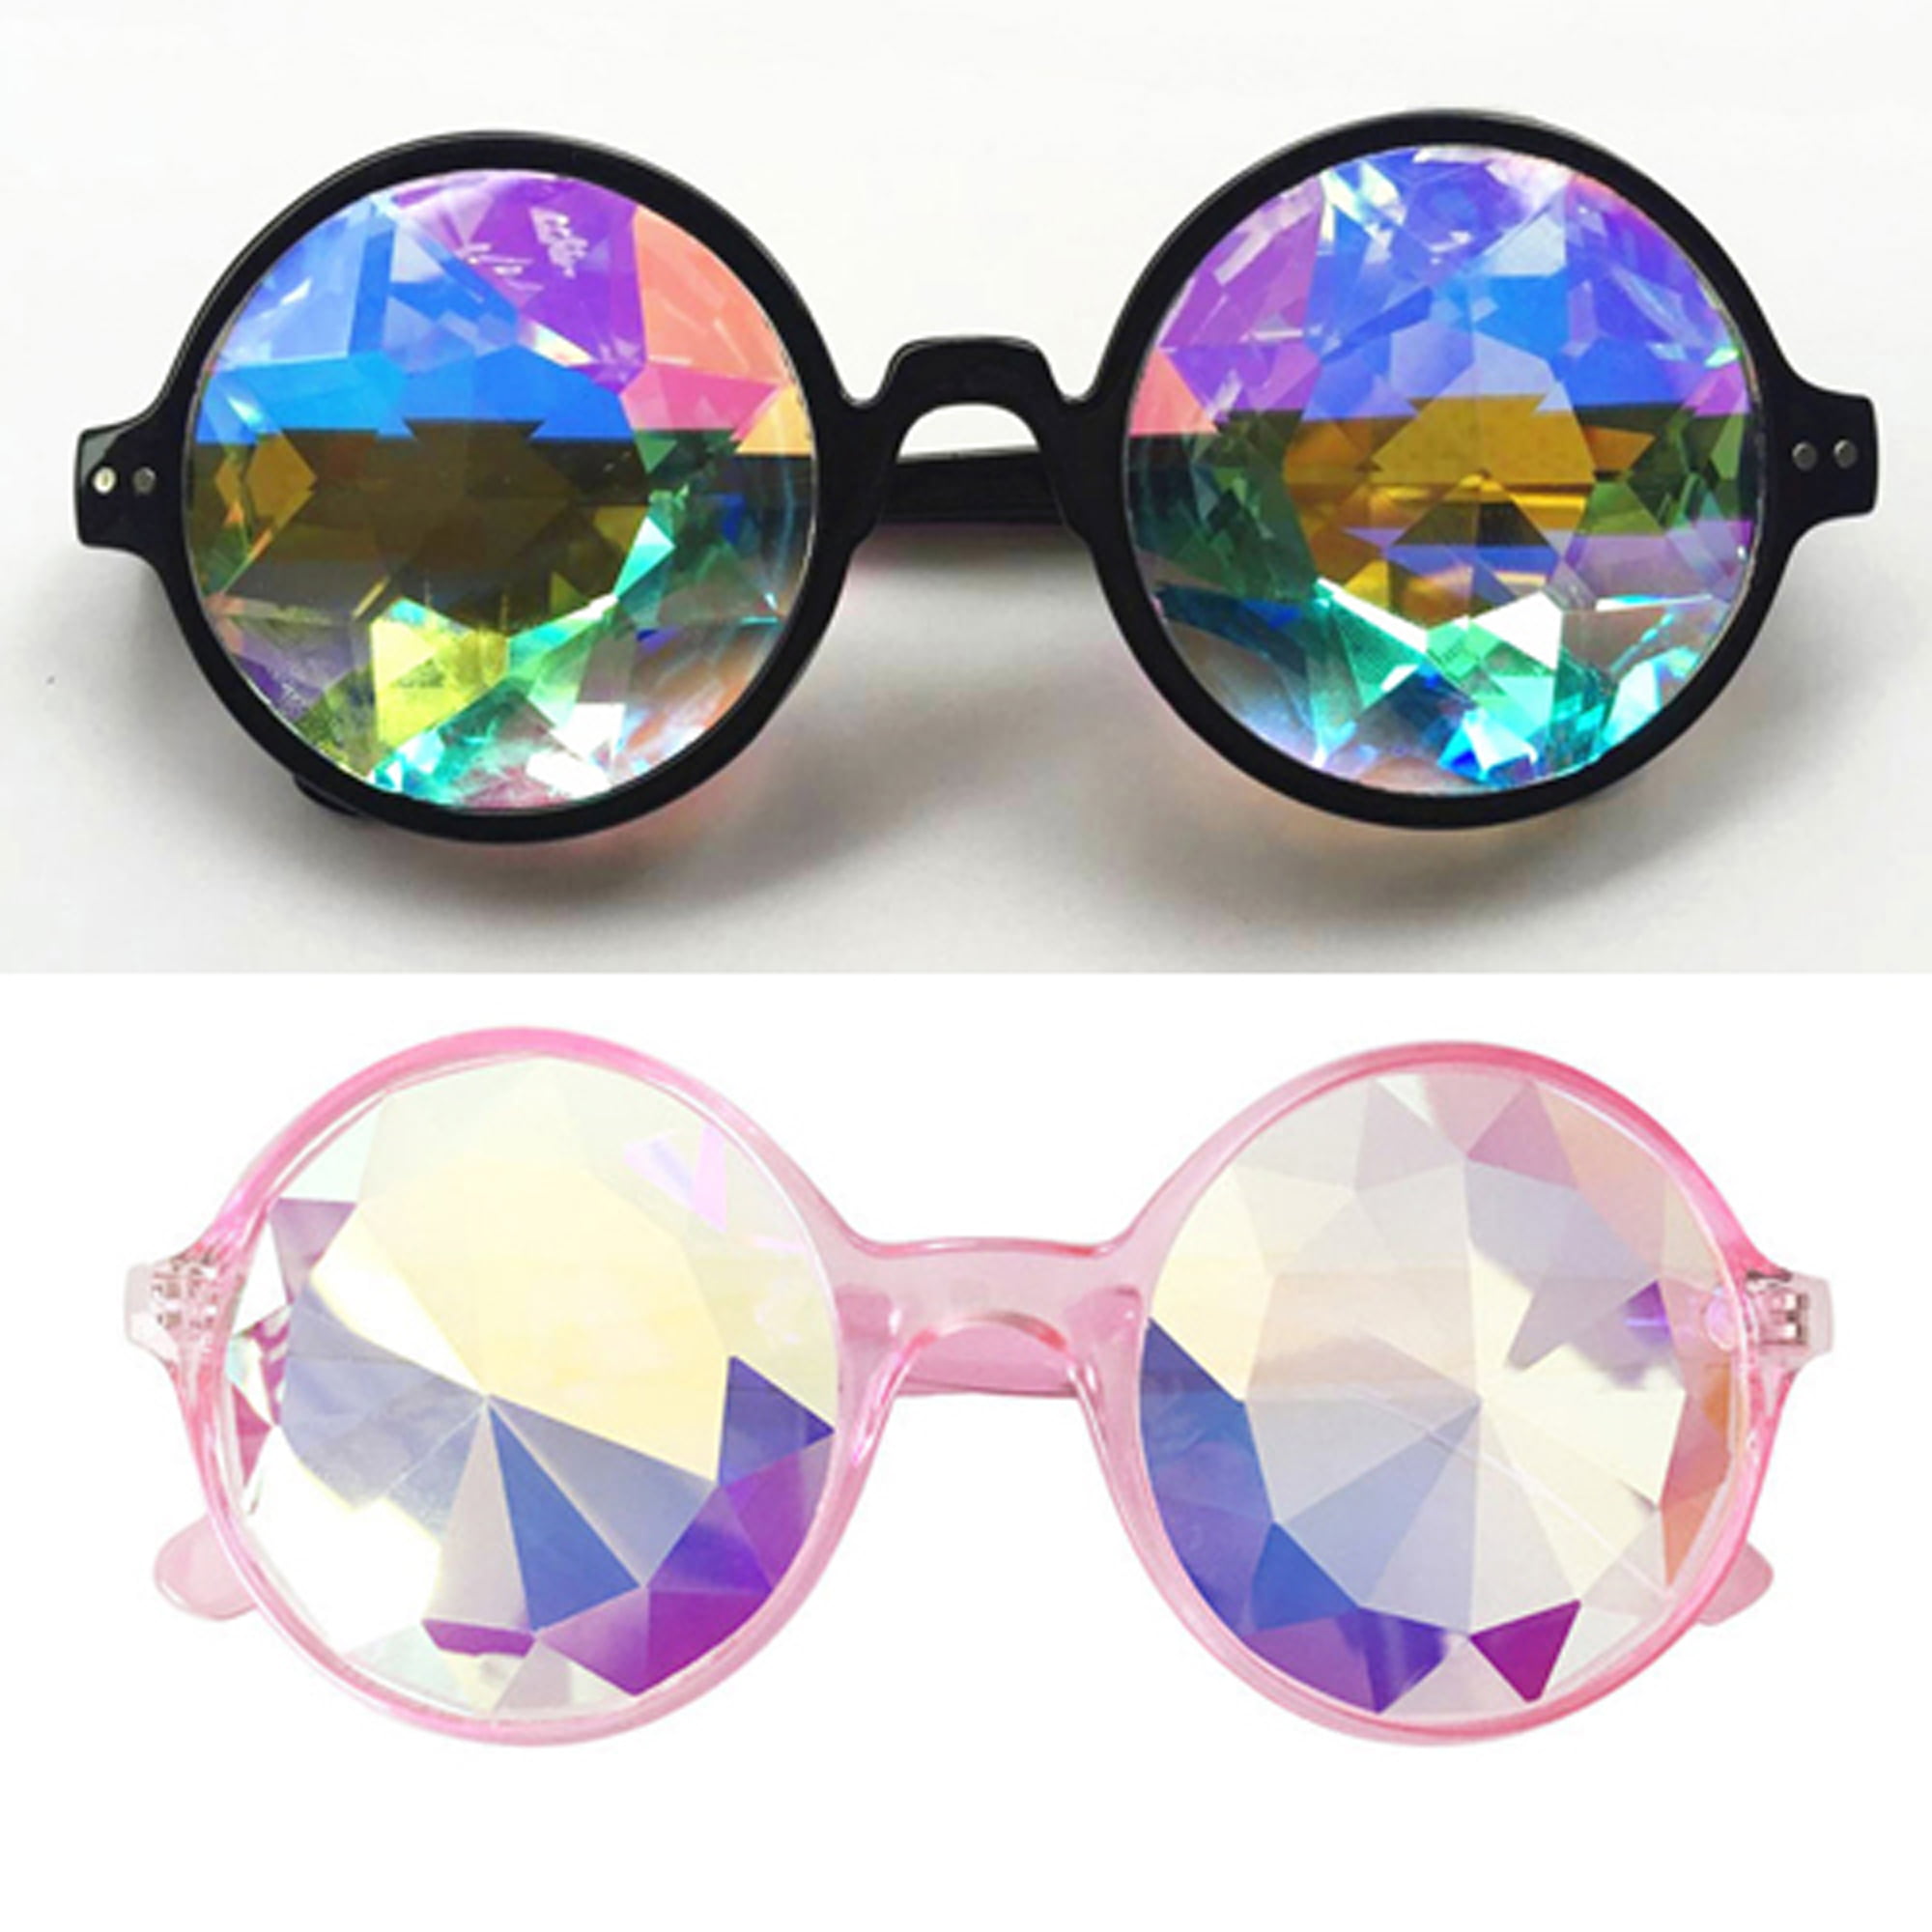 Kaleidoscope Glasses 3D Magic Light Diffraction Holiday Specs Rainbow Spectrum 